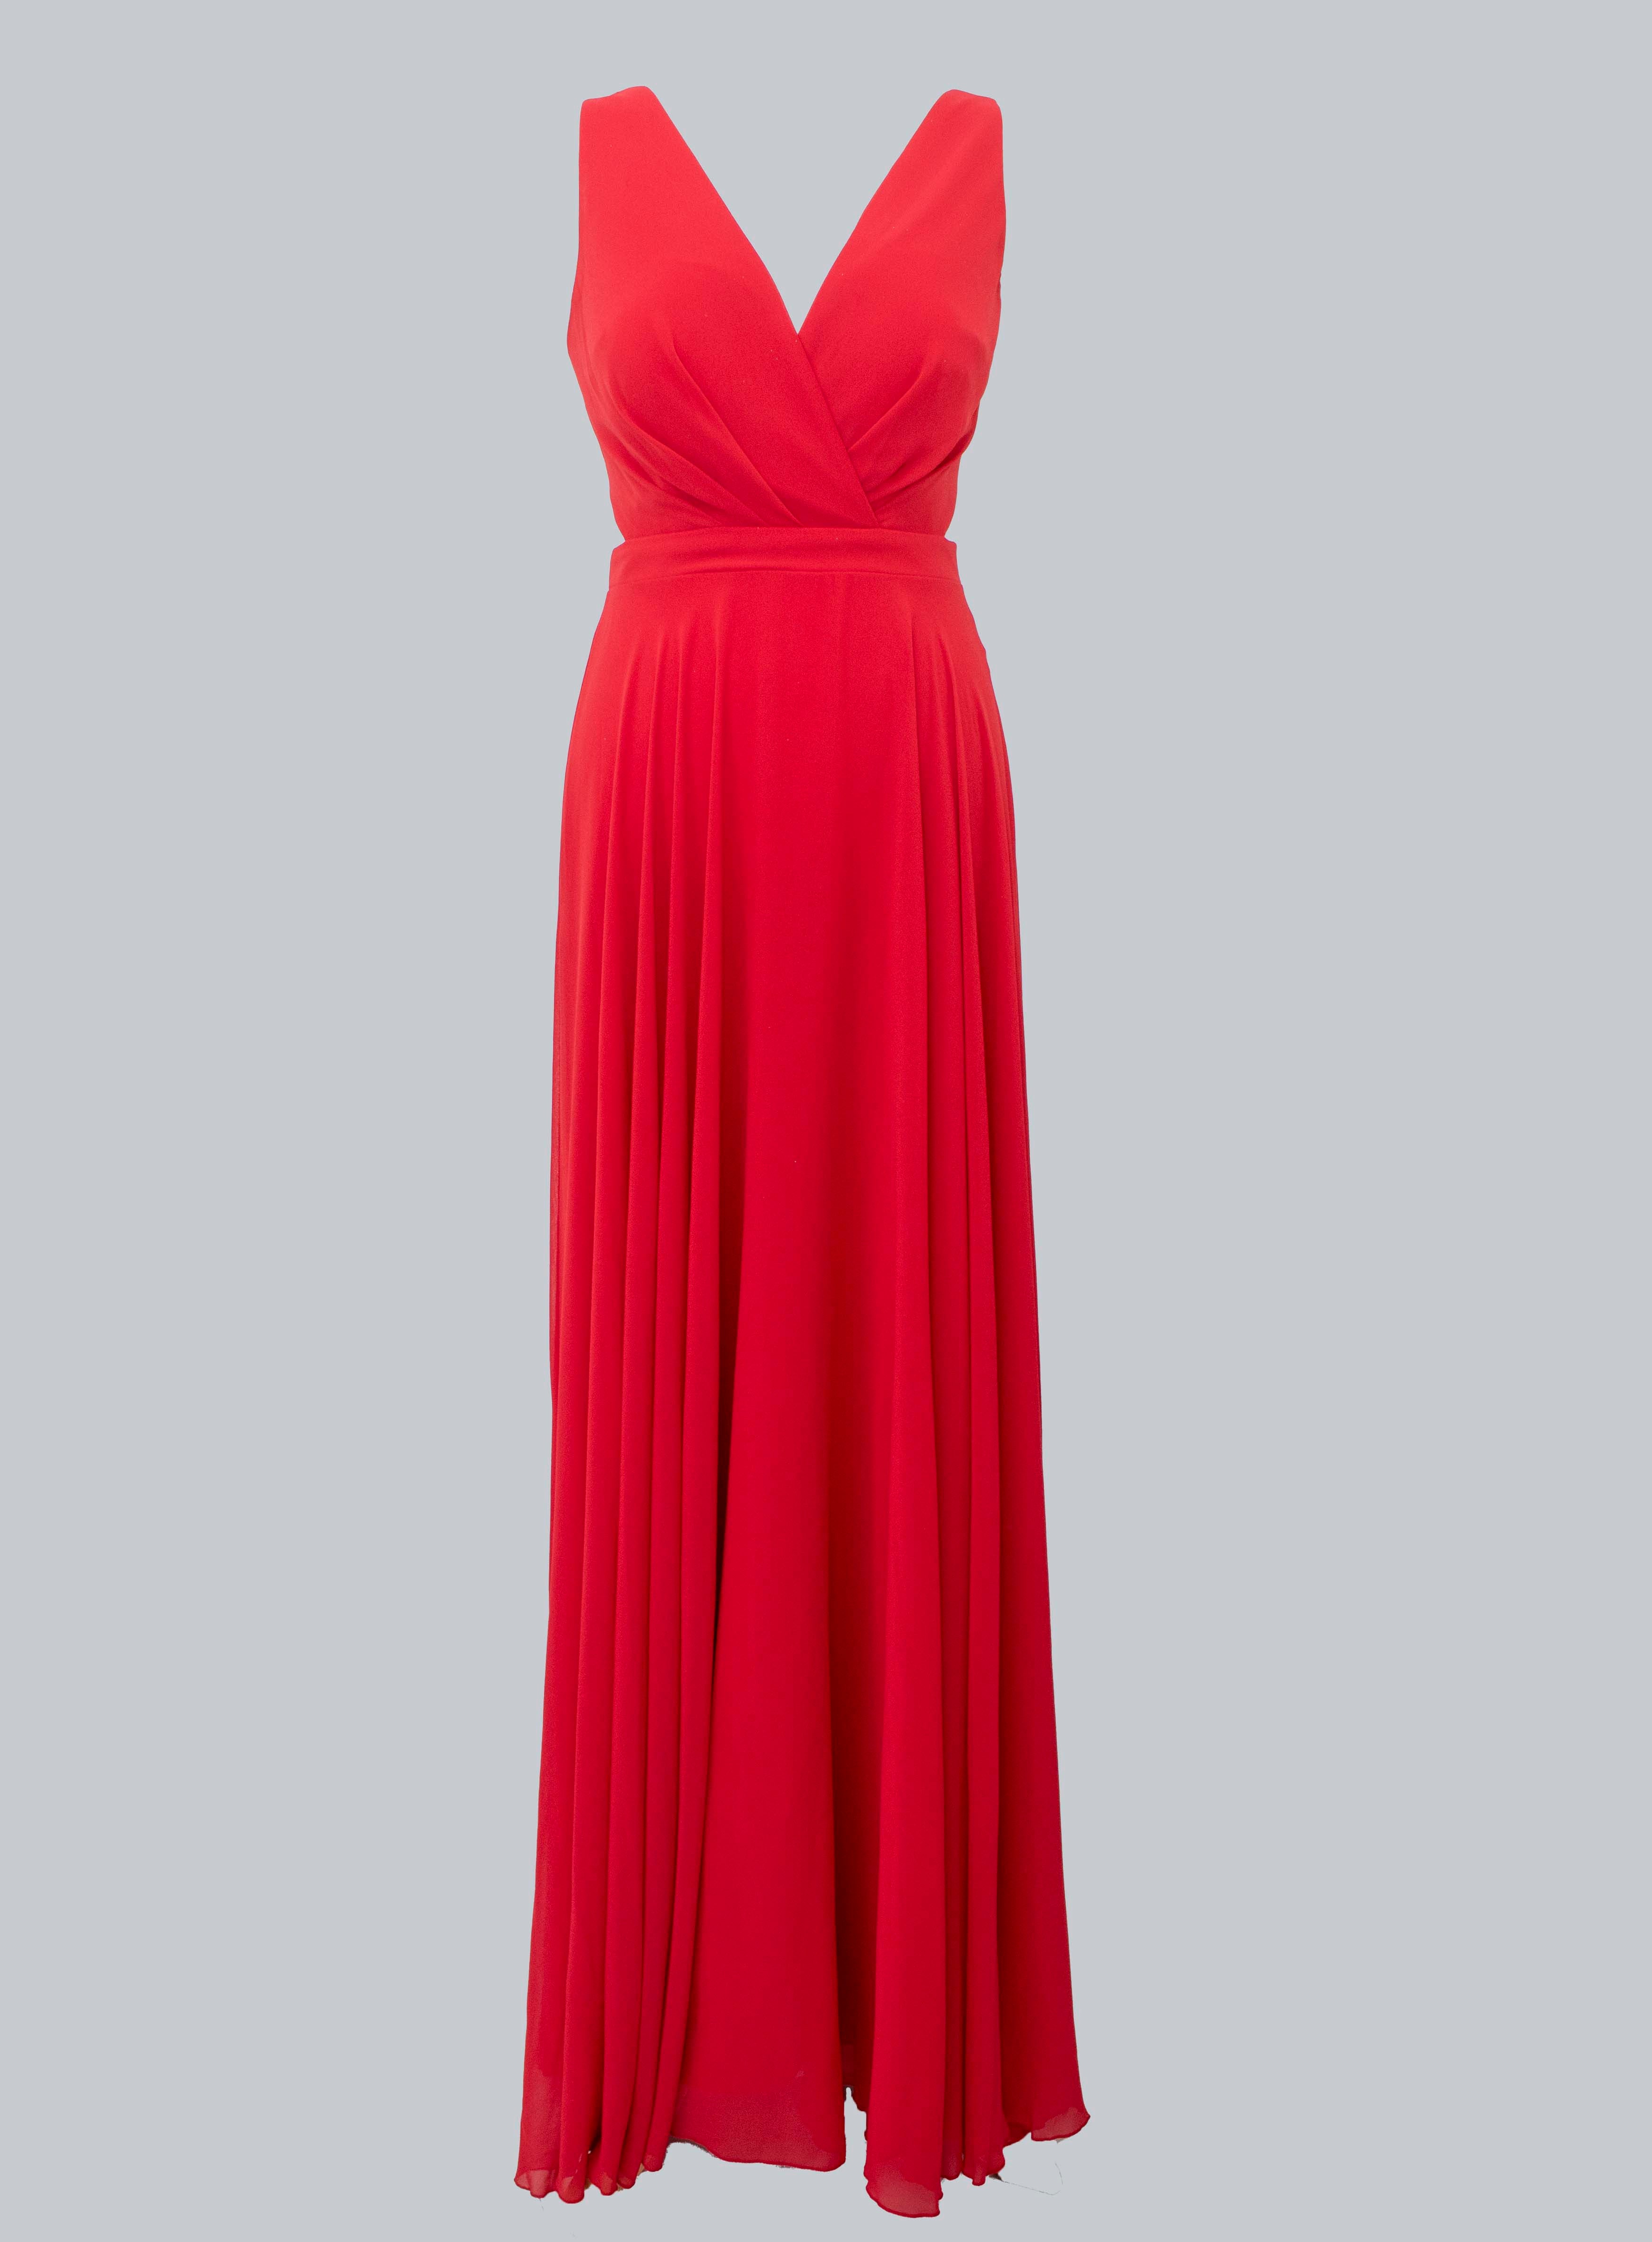 Red Evening Maxi Dress